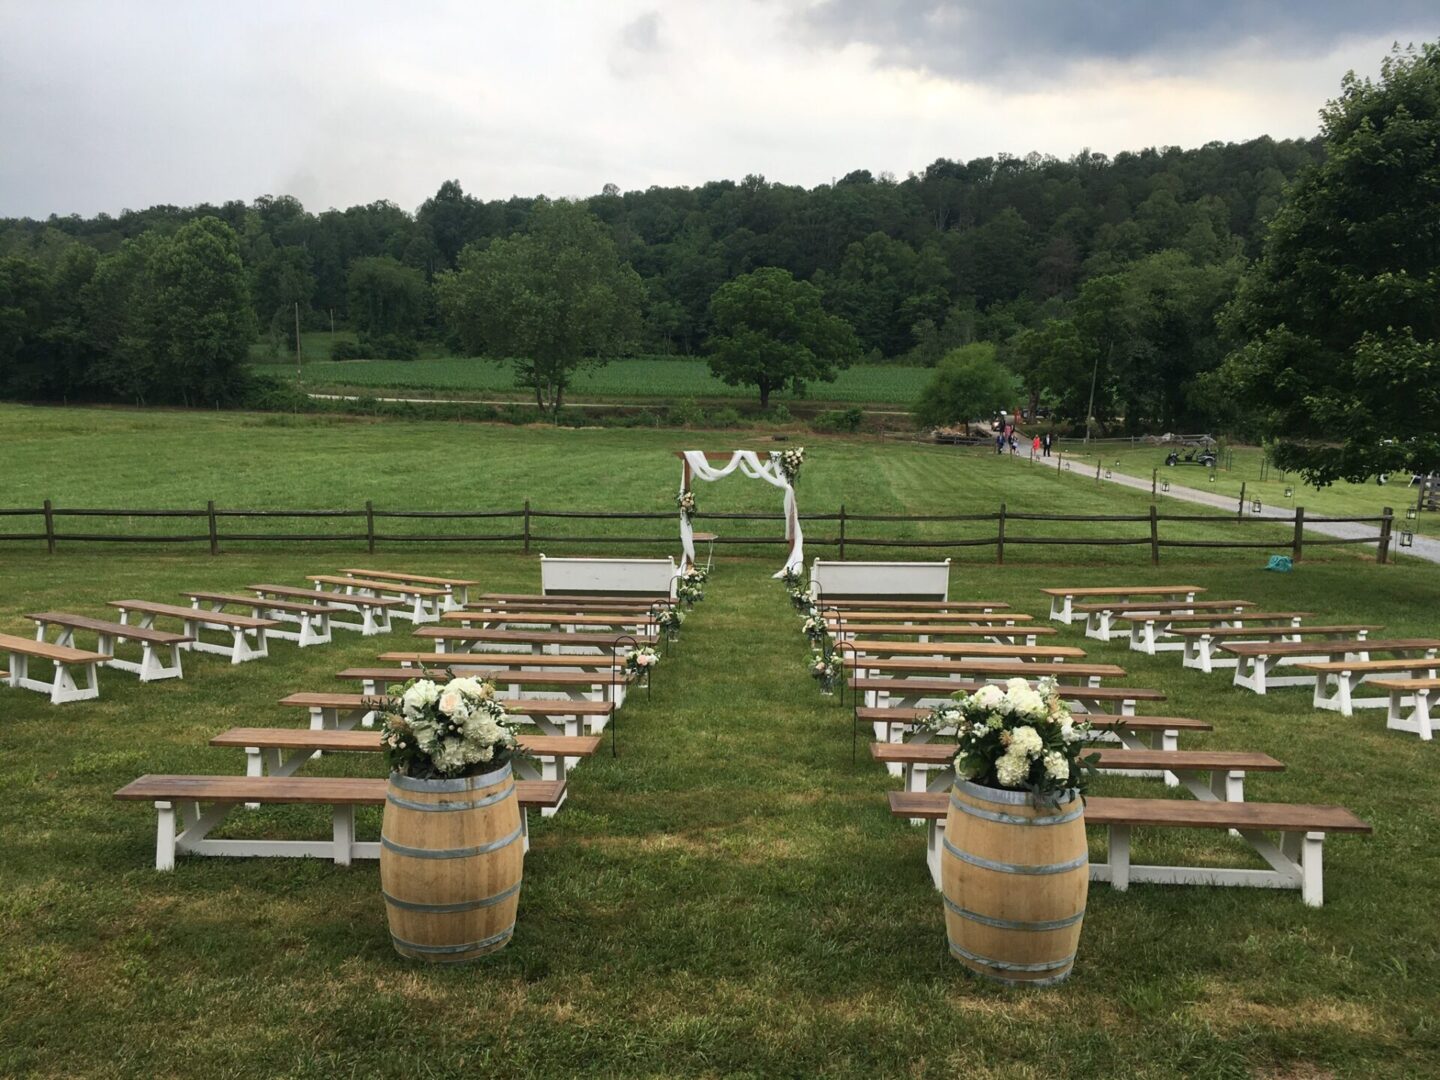 A beautiful farm area decorated for a wedding